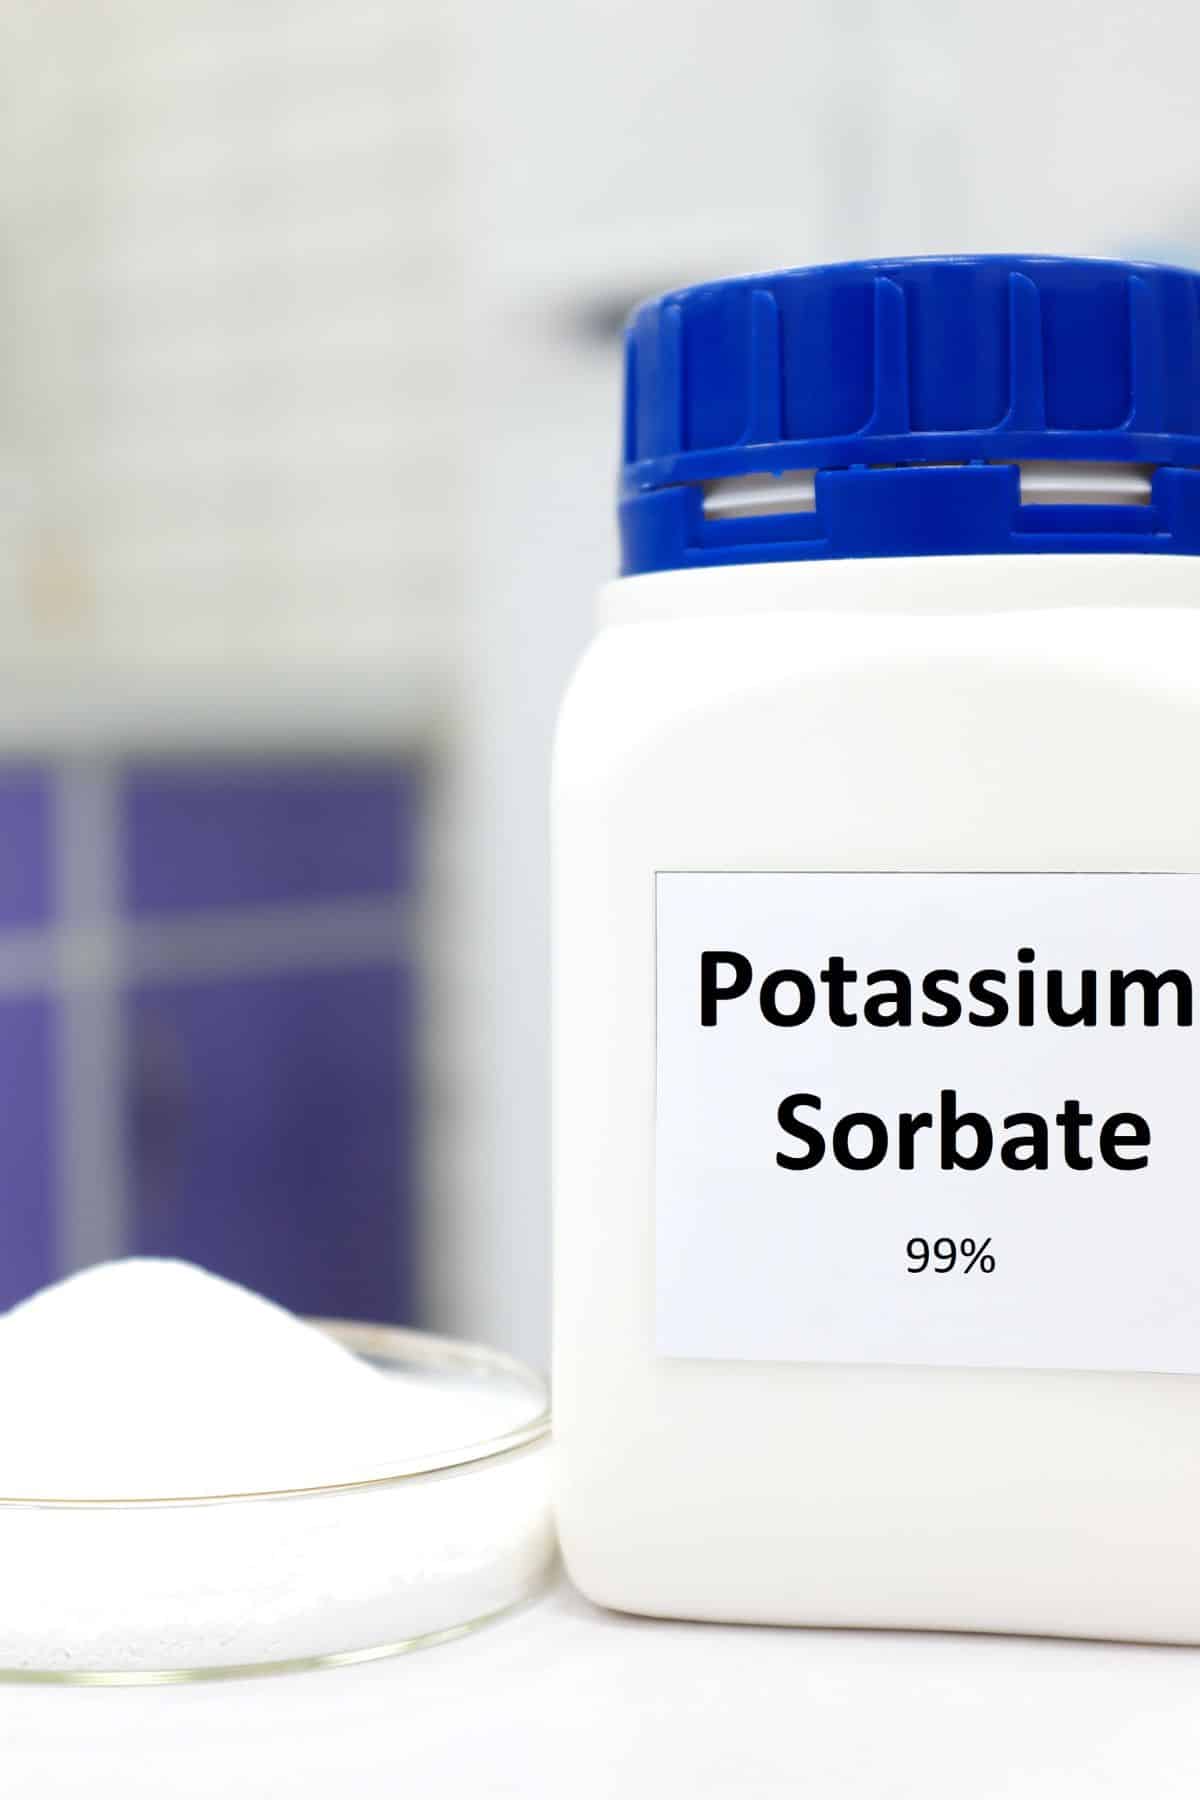 a bottle of potassium sorbate next to a beaker full of potassium sorbate.